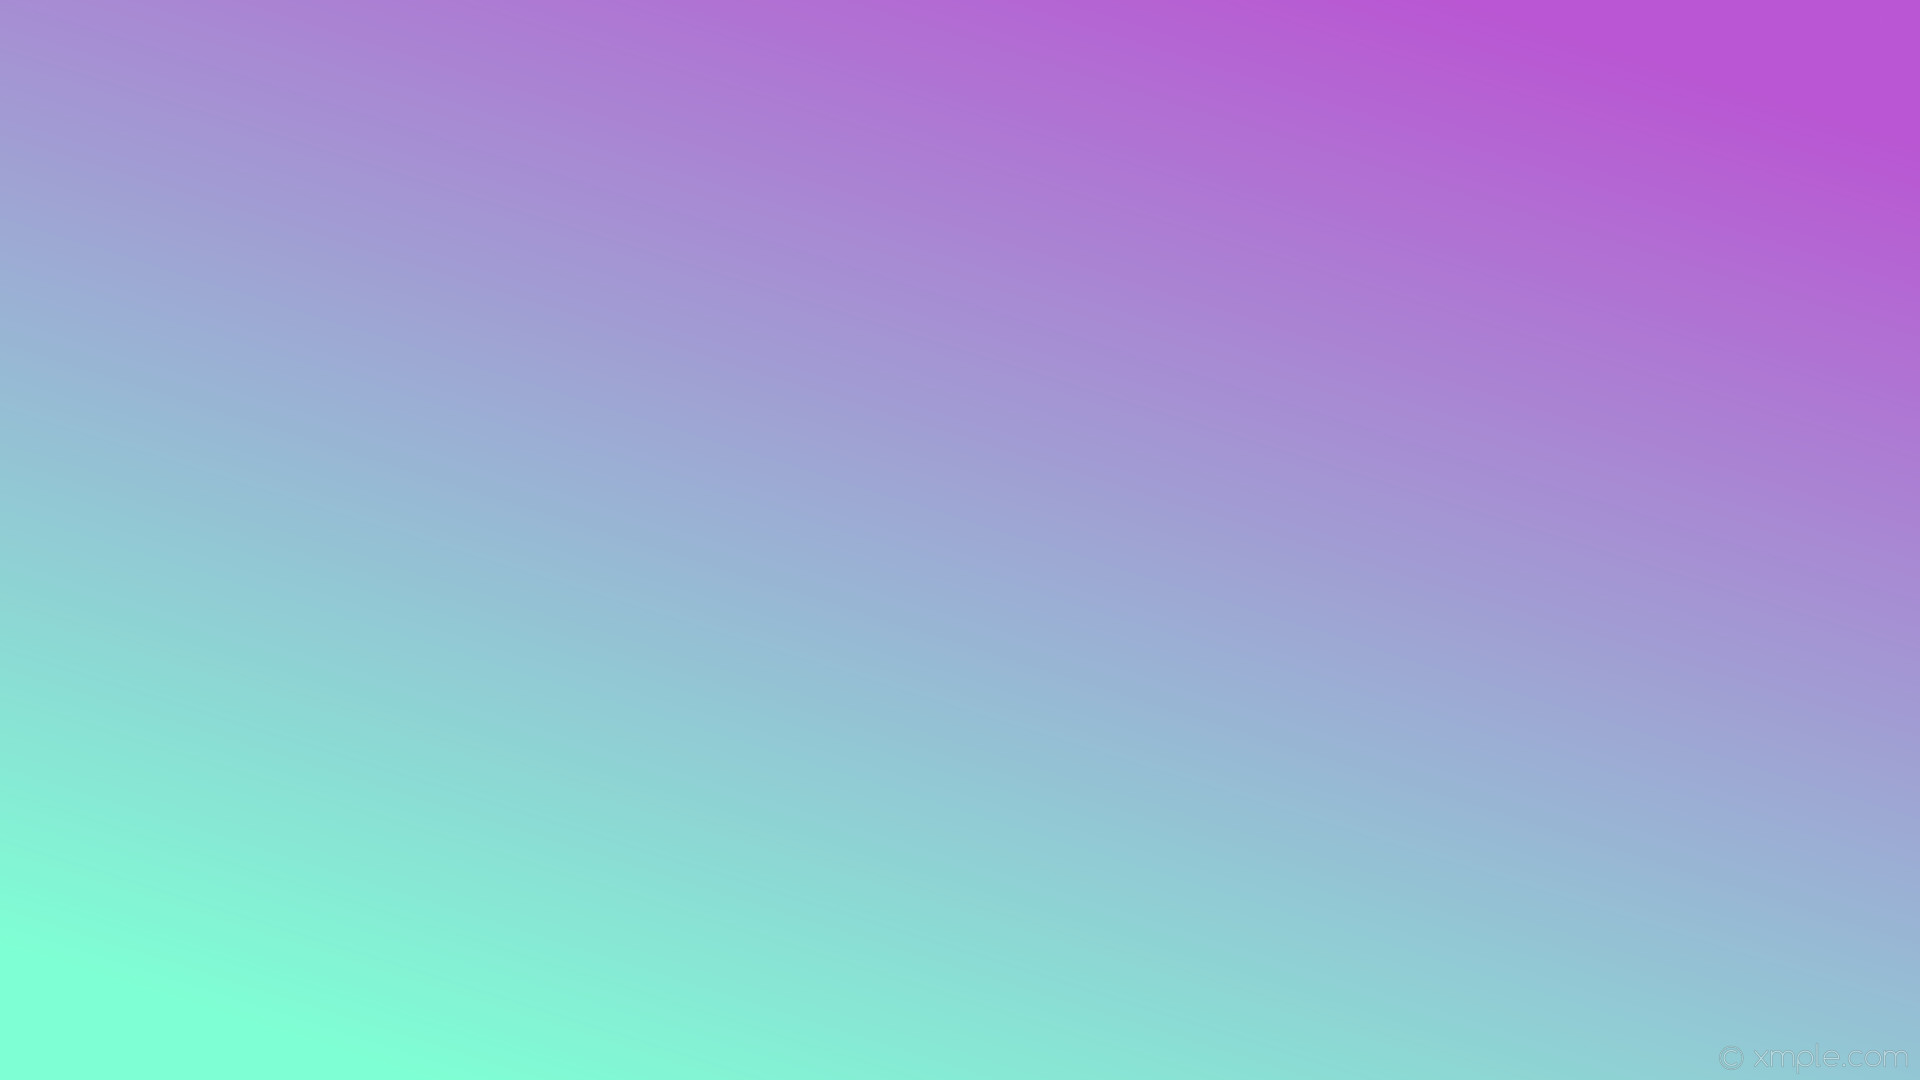 1920x1080 wallpaper blue purple gradient linear medium orchid aquamarine #ba55d3  #7fffd4 45Â°